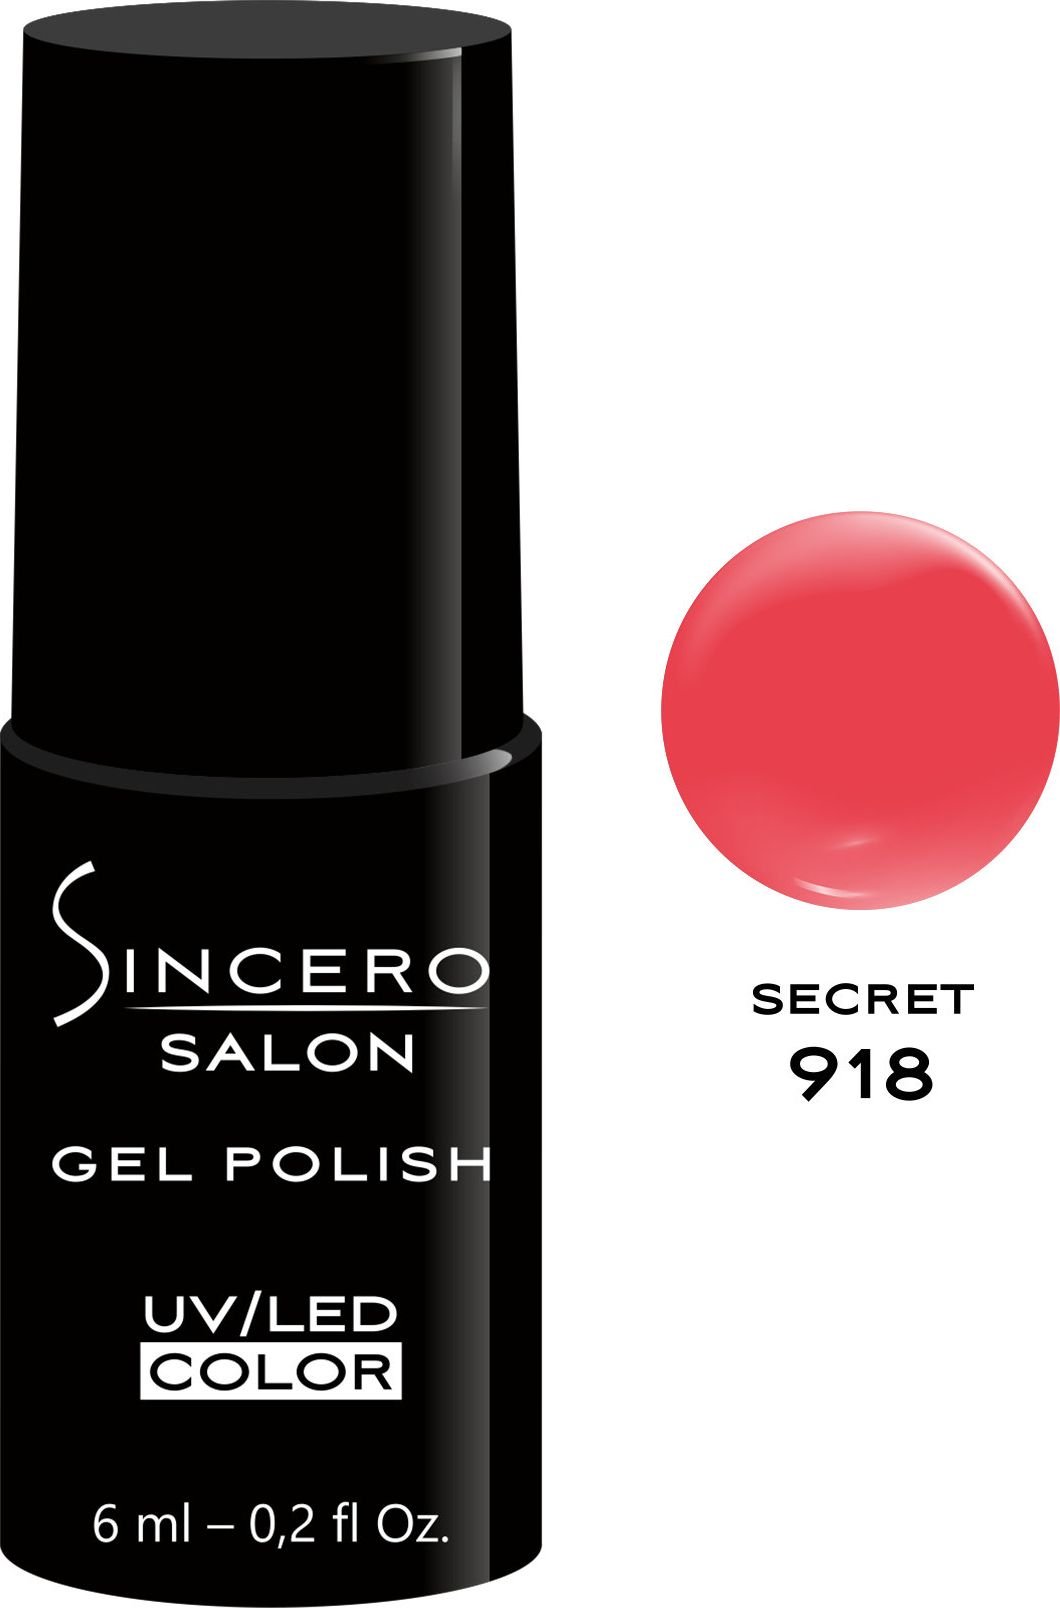 Sincero Salon Gel Polish UV/LED 918 Secret 6ml